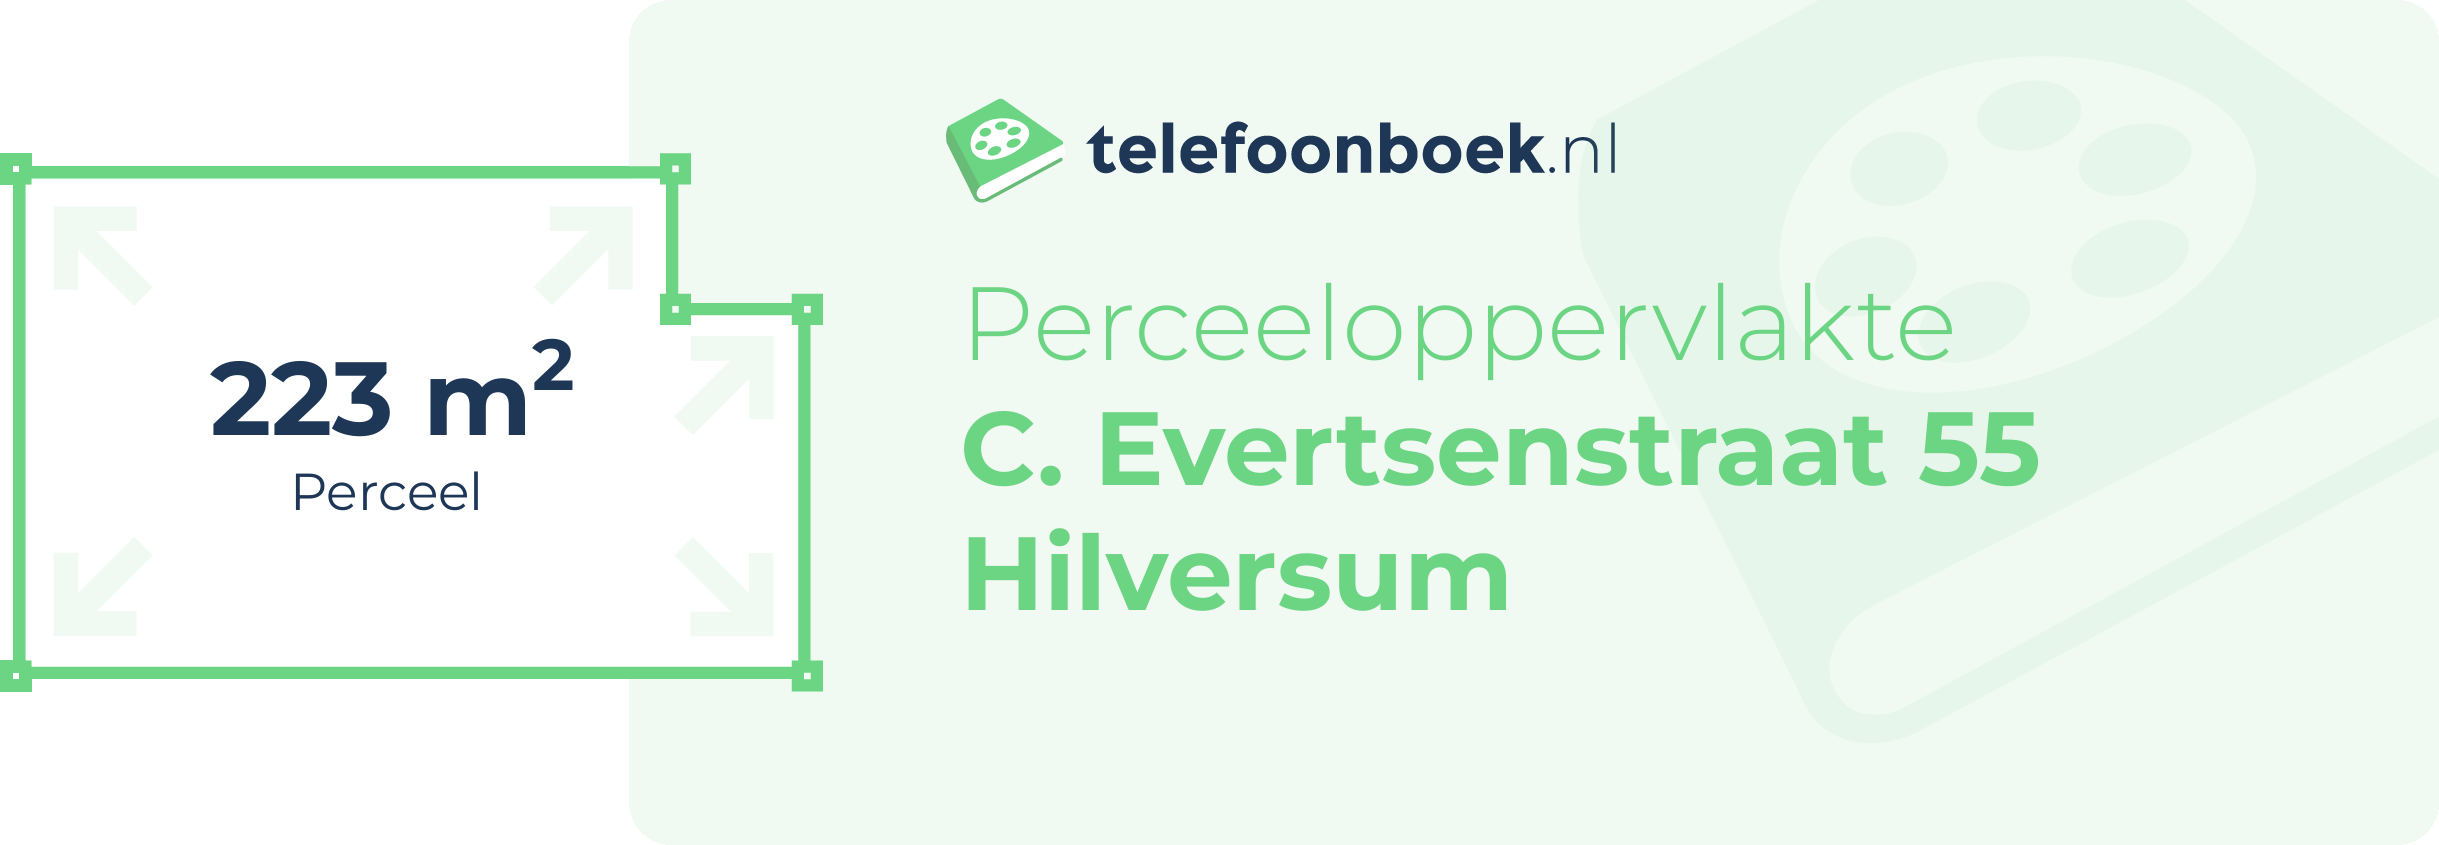 Perceeloppervlakte C. Evertsenstraat 55 Hilversum